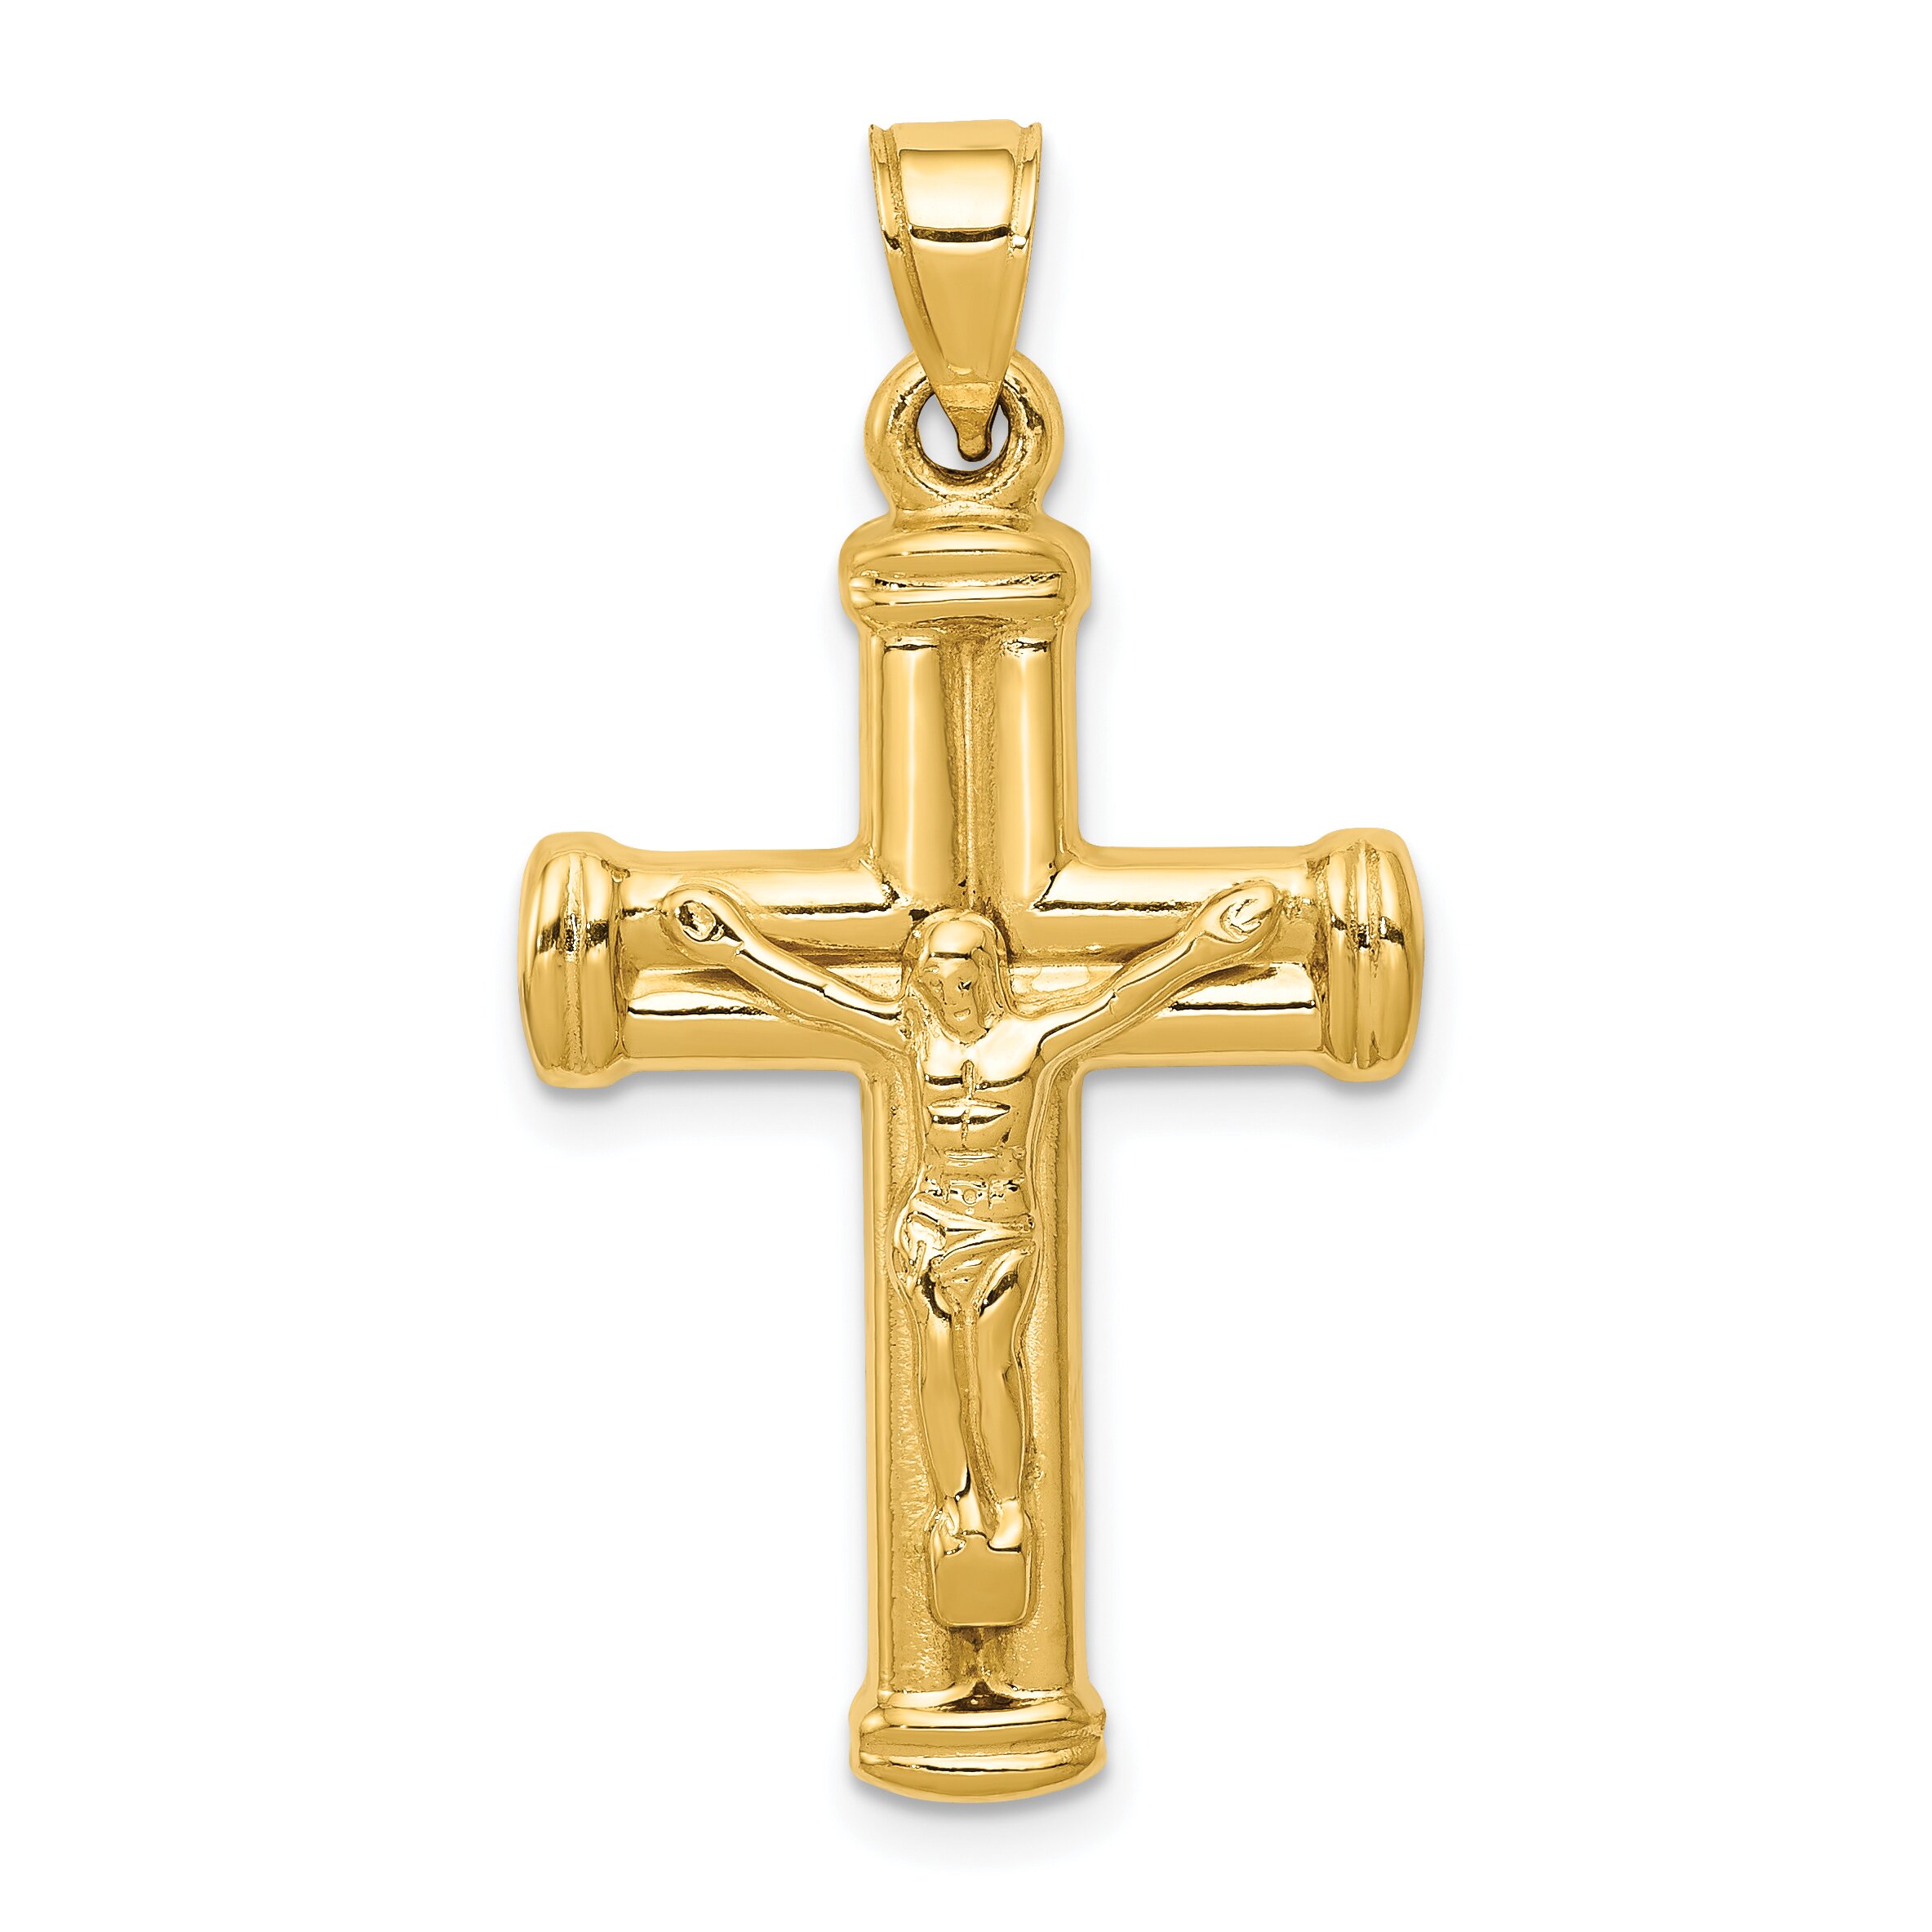 Findingking 14K Gold Hollow Crucifix Pendant